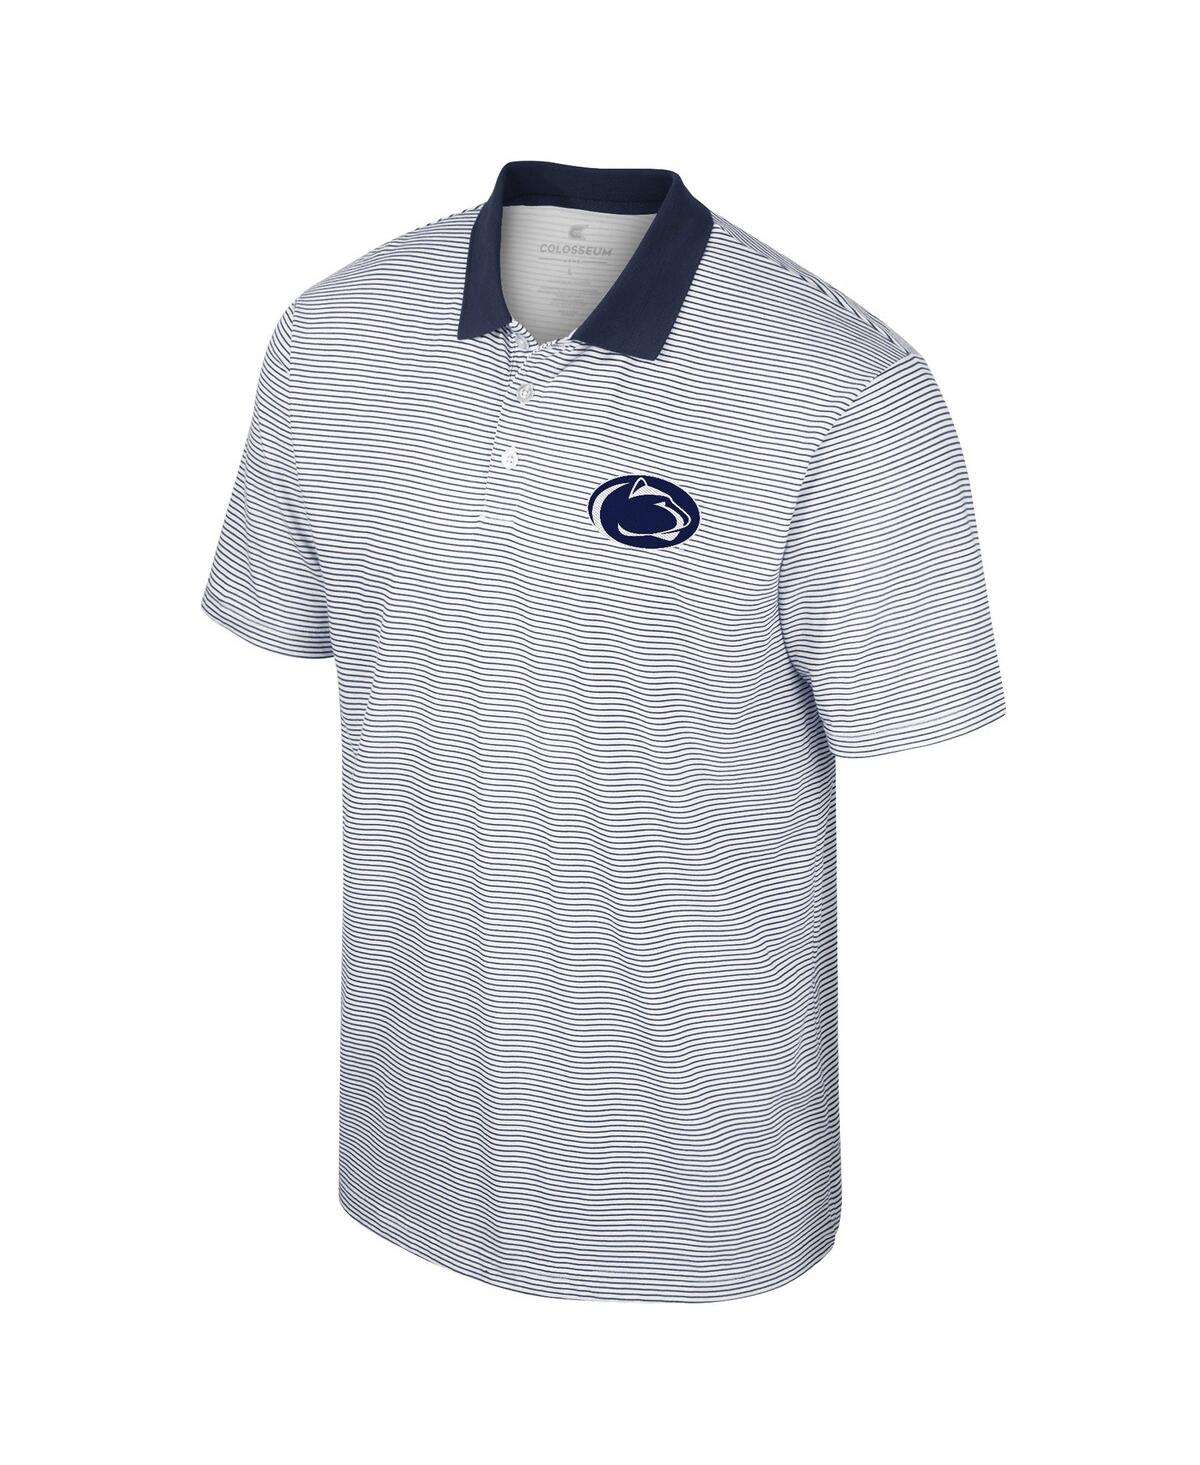 Shop Colosseum Men's  White Penn State Nittany Lions Print Stripe Polo Shirt